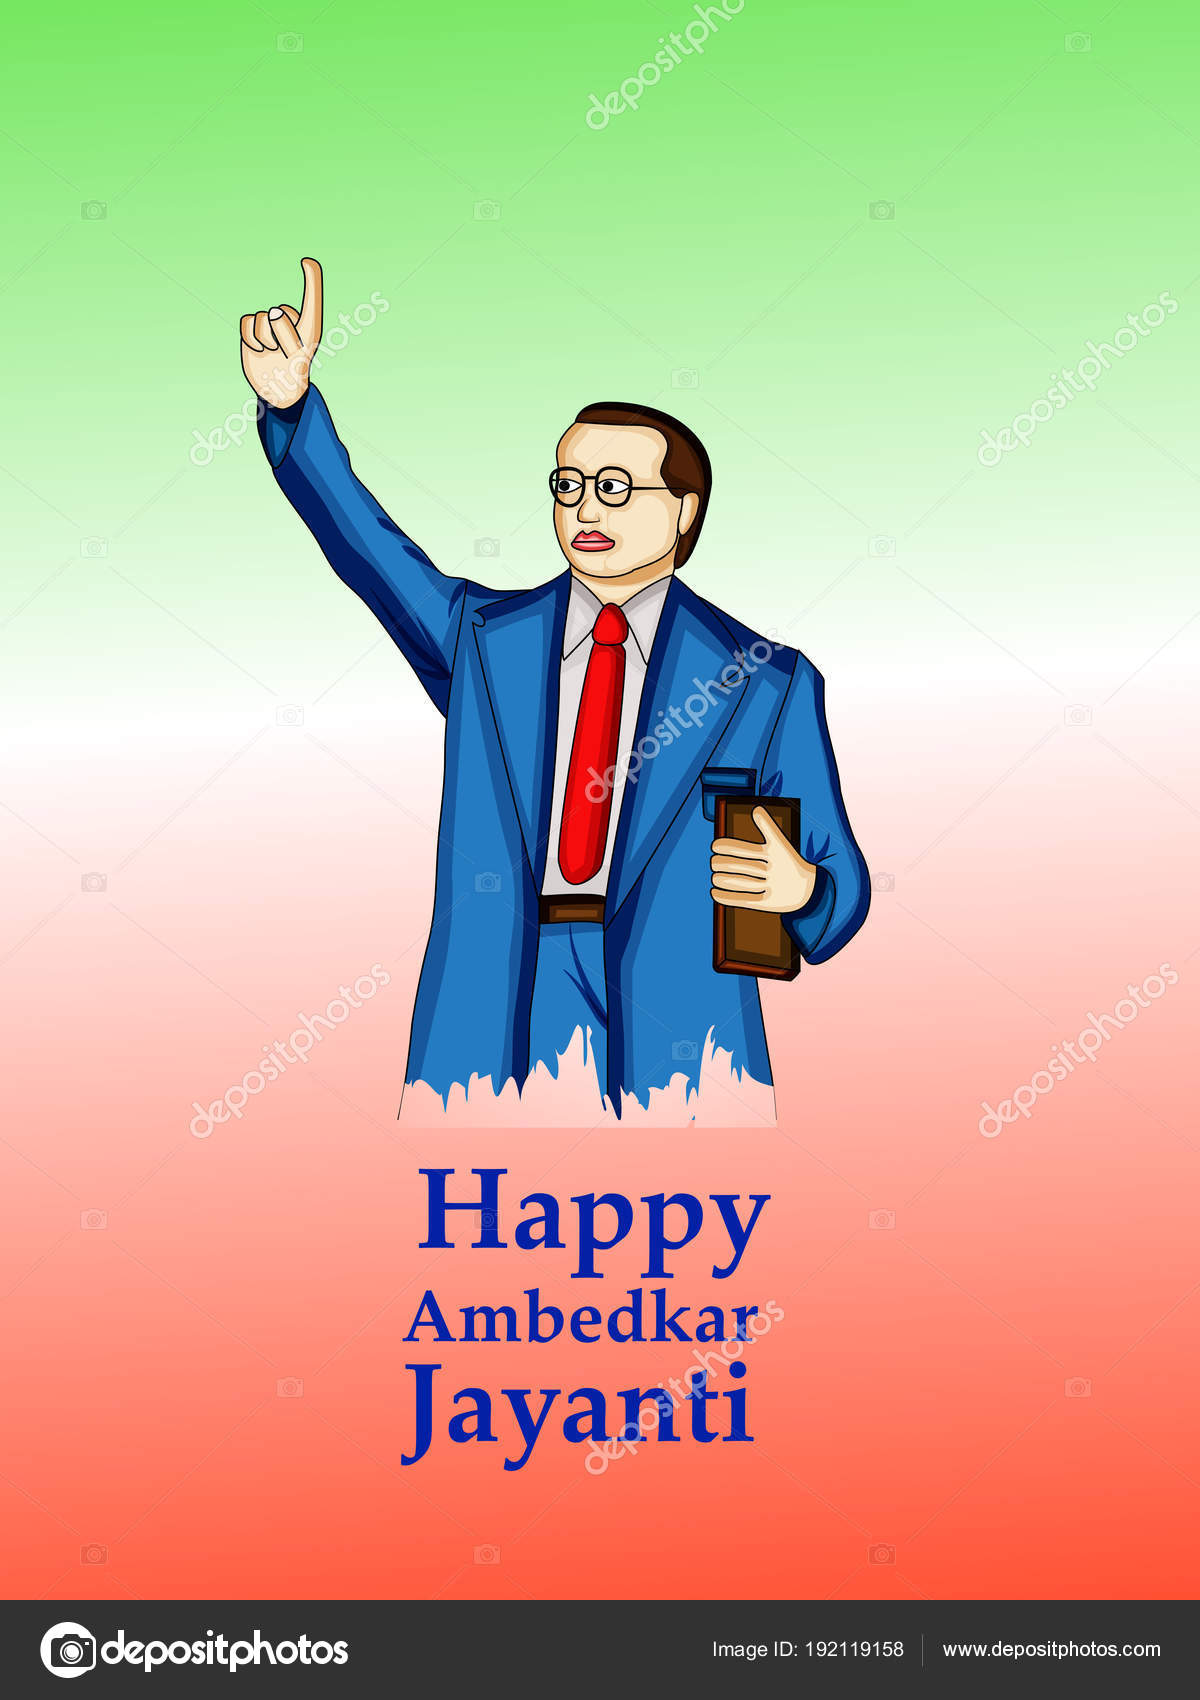 Ambedkar Jayanti Holiday In India - HD Wallpaper 